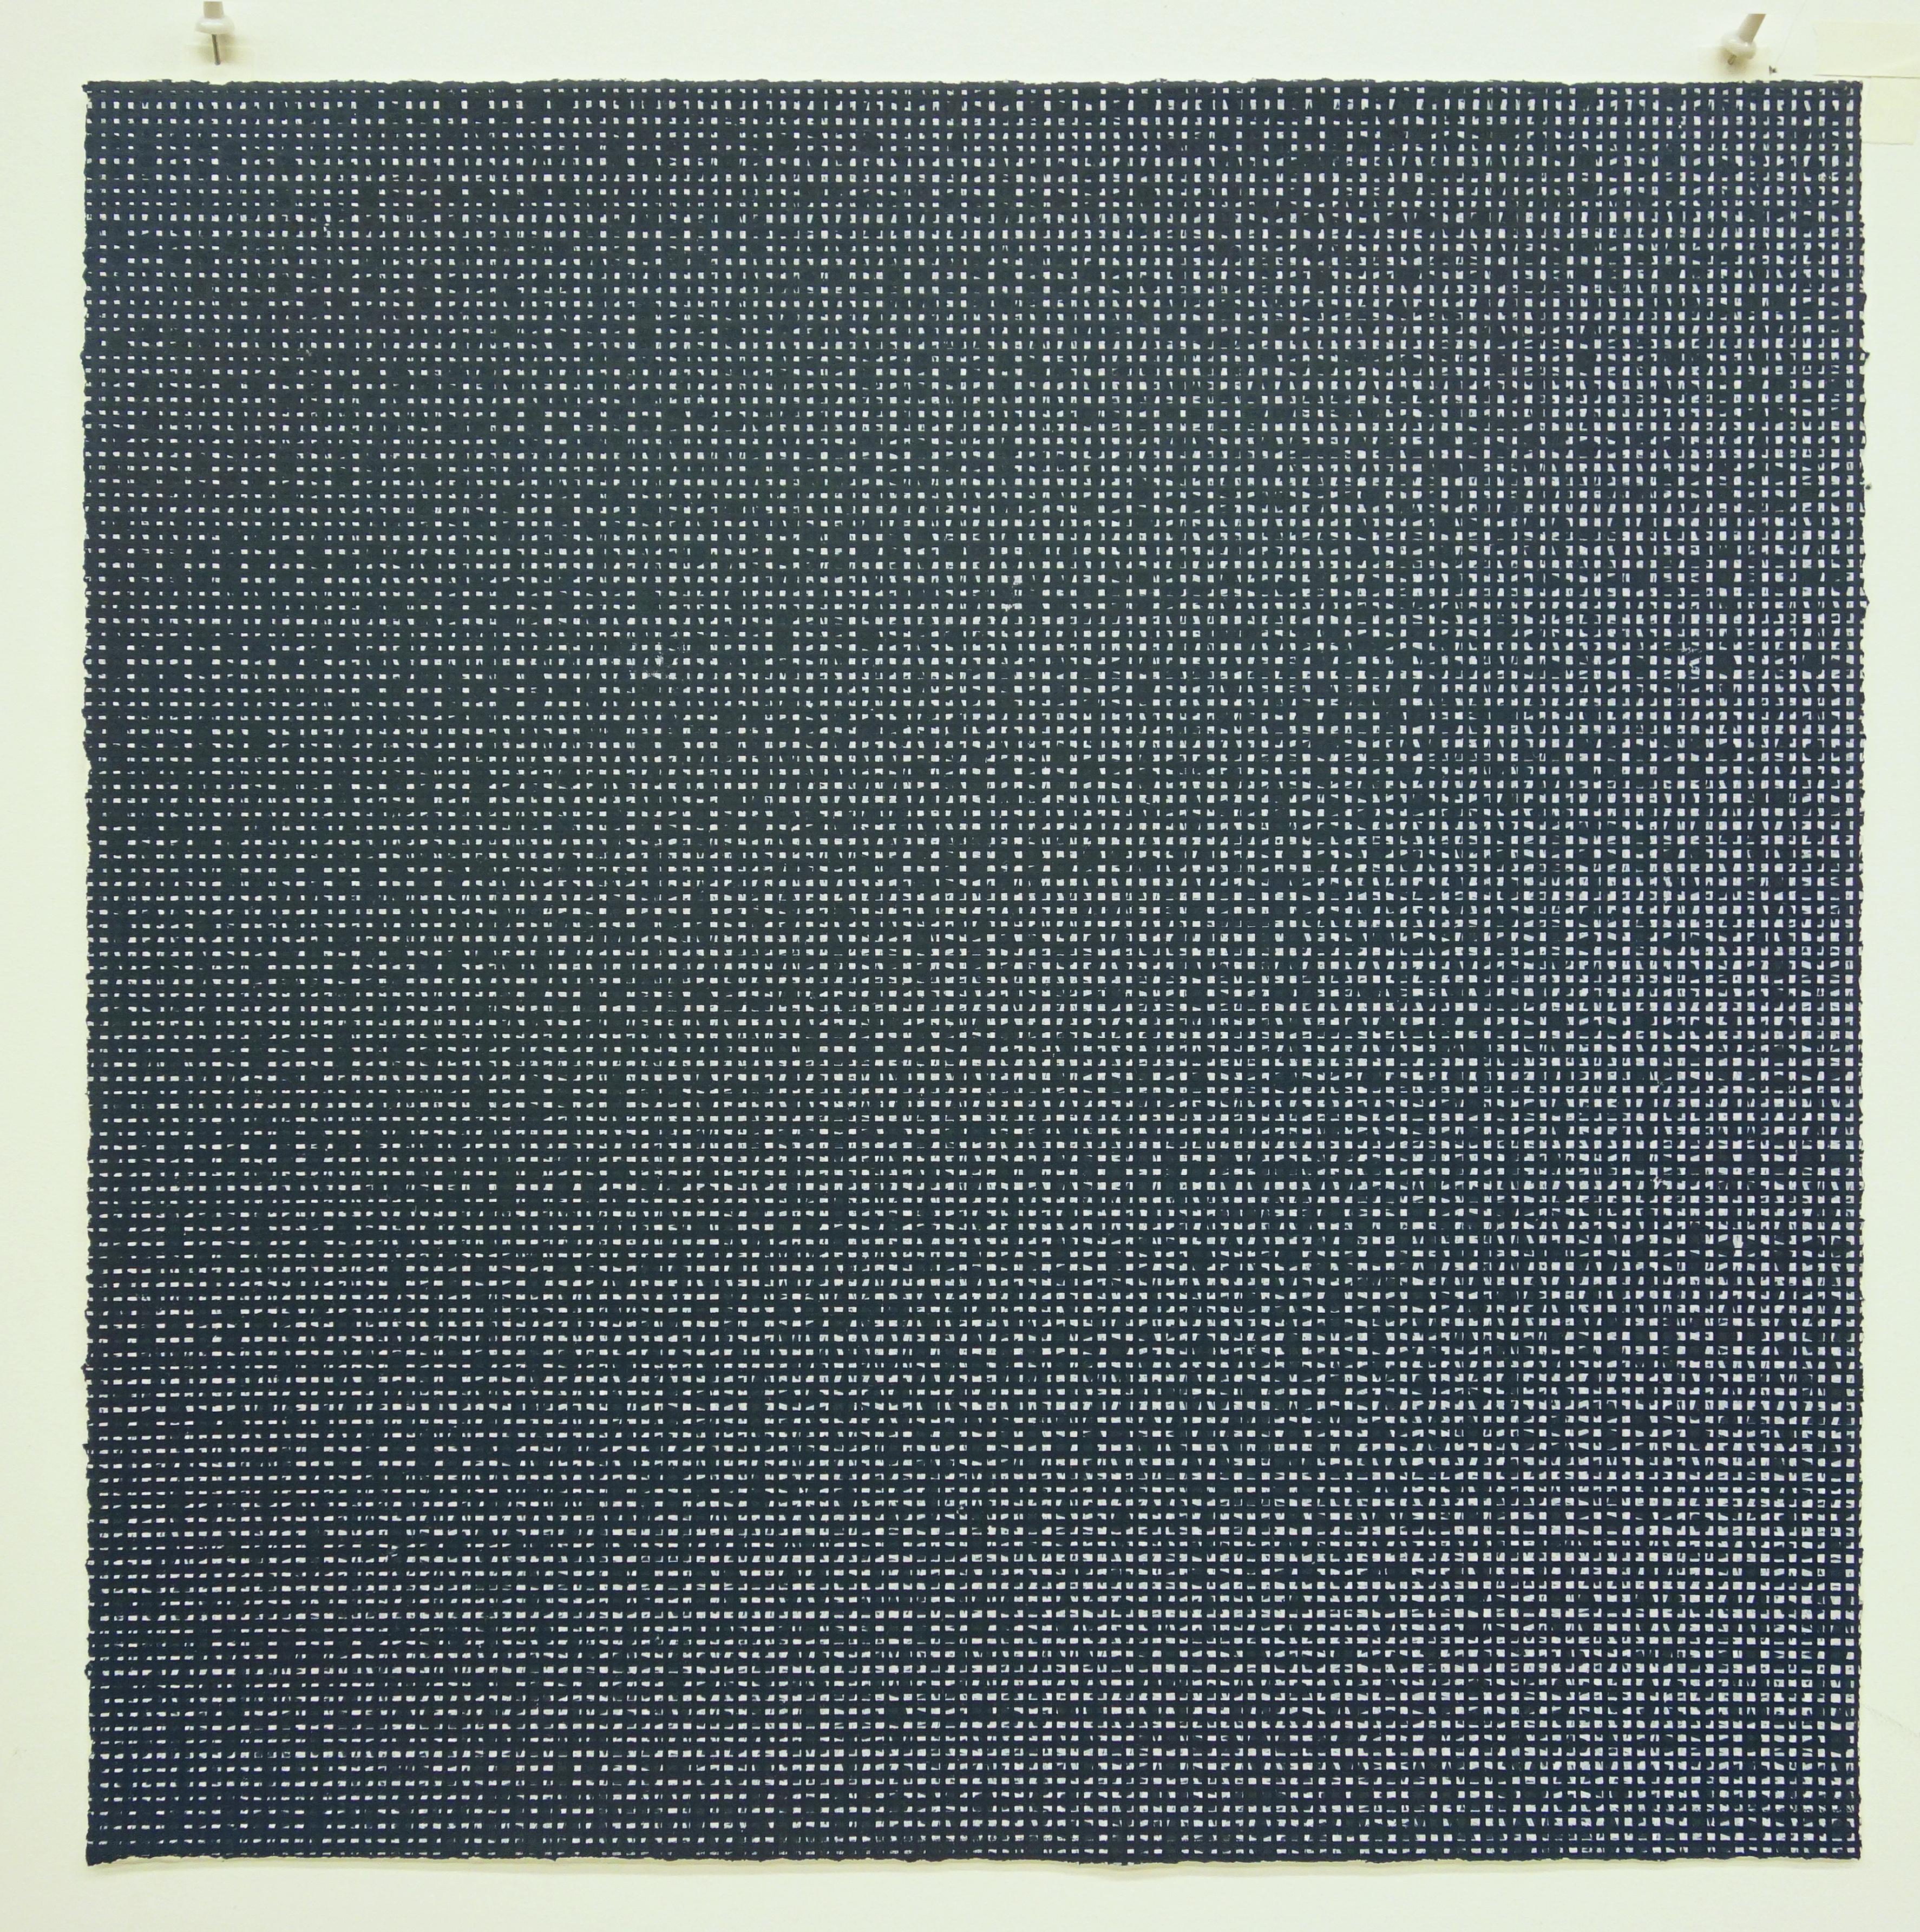 Rob de Oude, Untitled-Wassaic 1, 2016, silkscreen, 18 x 18 inches, Suite of 10 2